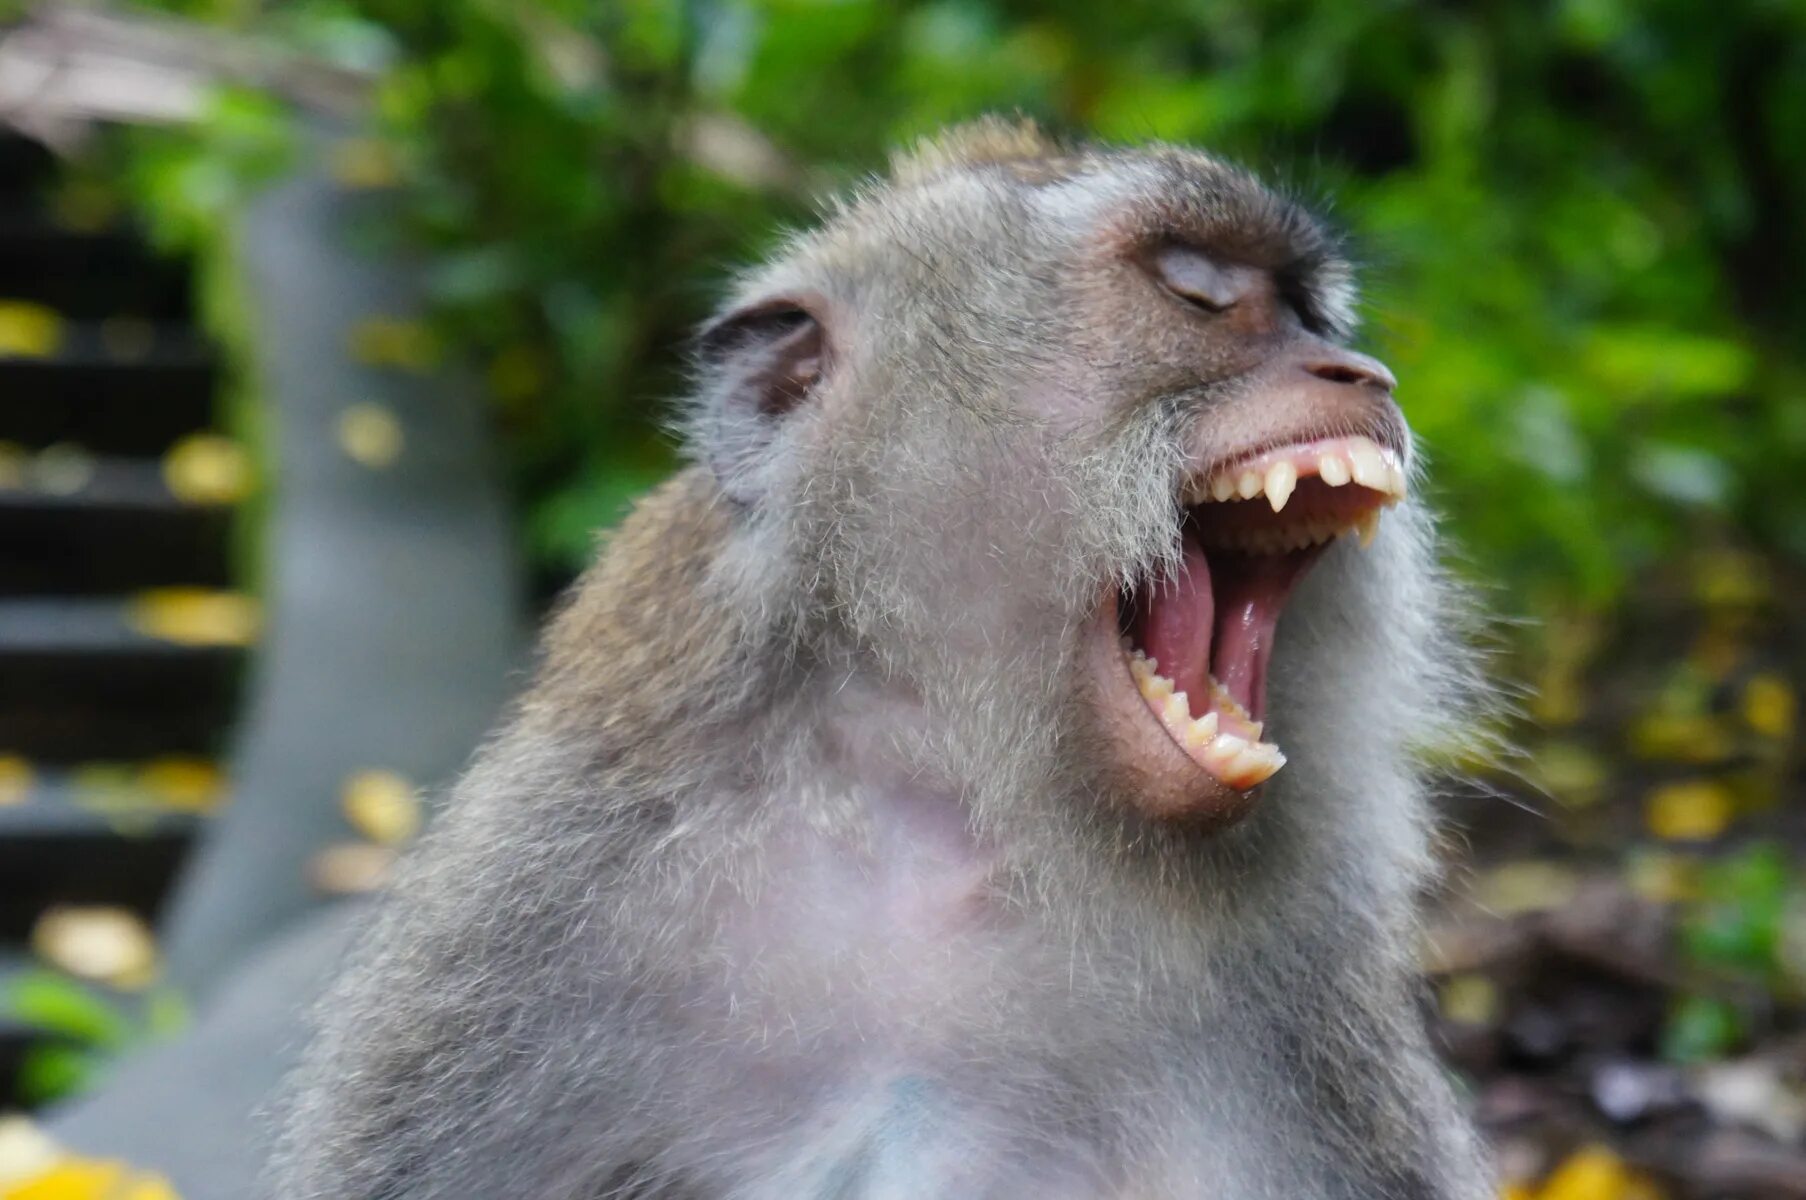 Обезьяна. Злая обезьяна. Обезьяна с открытым ртом. Кричащая обезьяна.